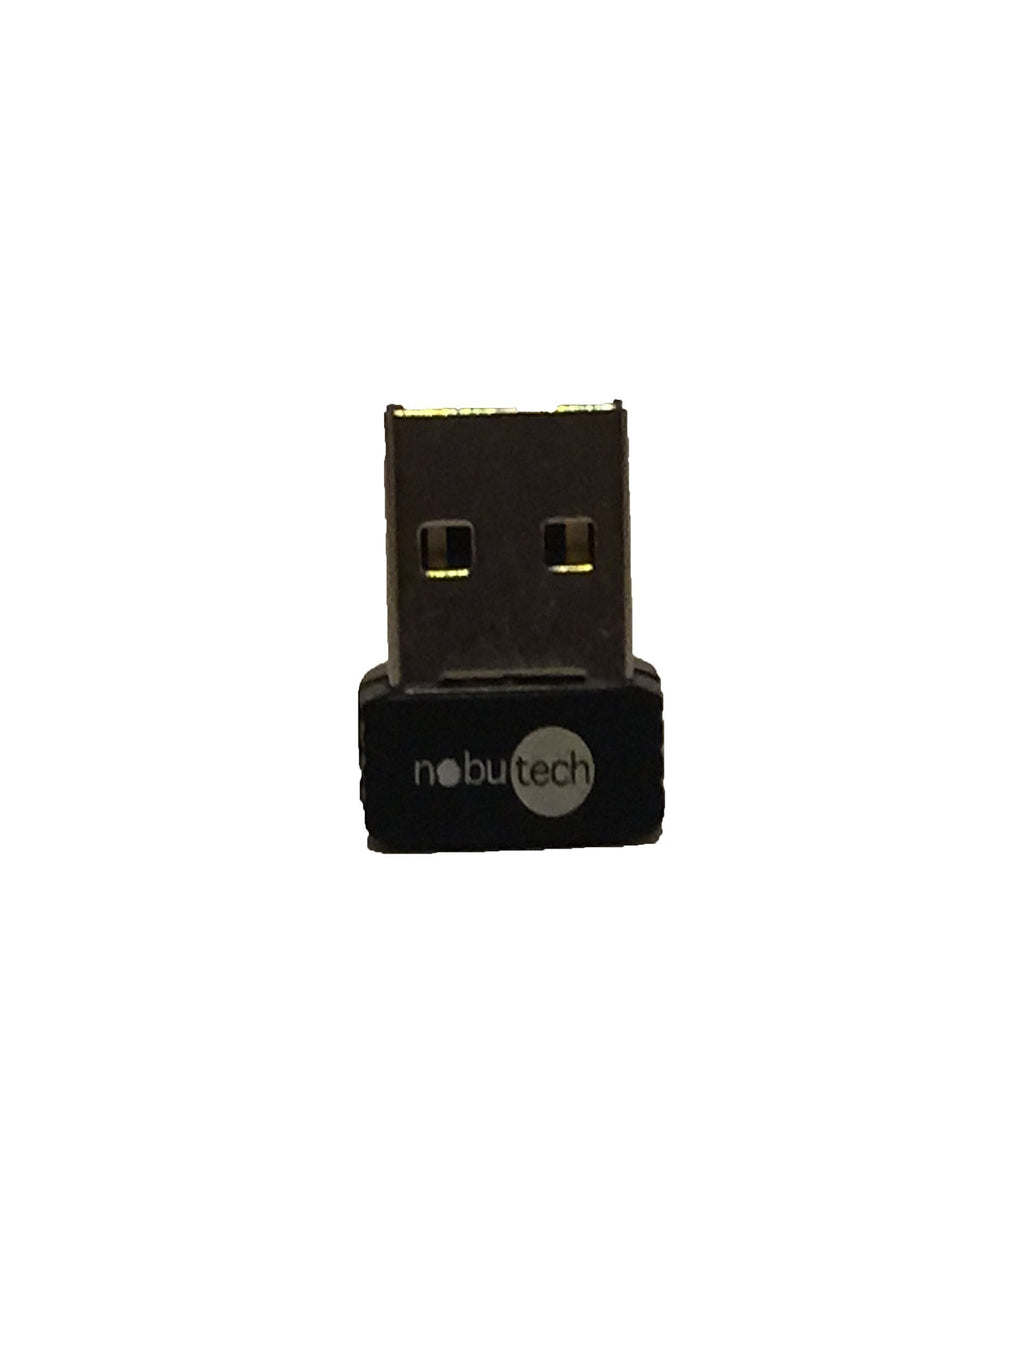 Nobutech WL100 Mini Nano Wireless N USB Adapter